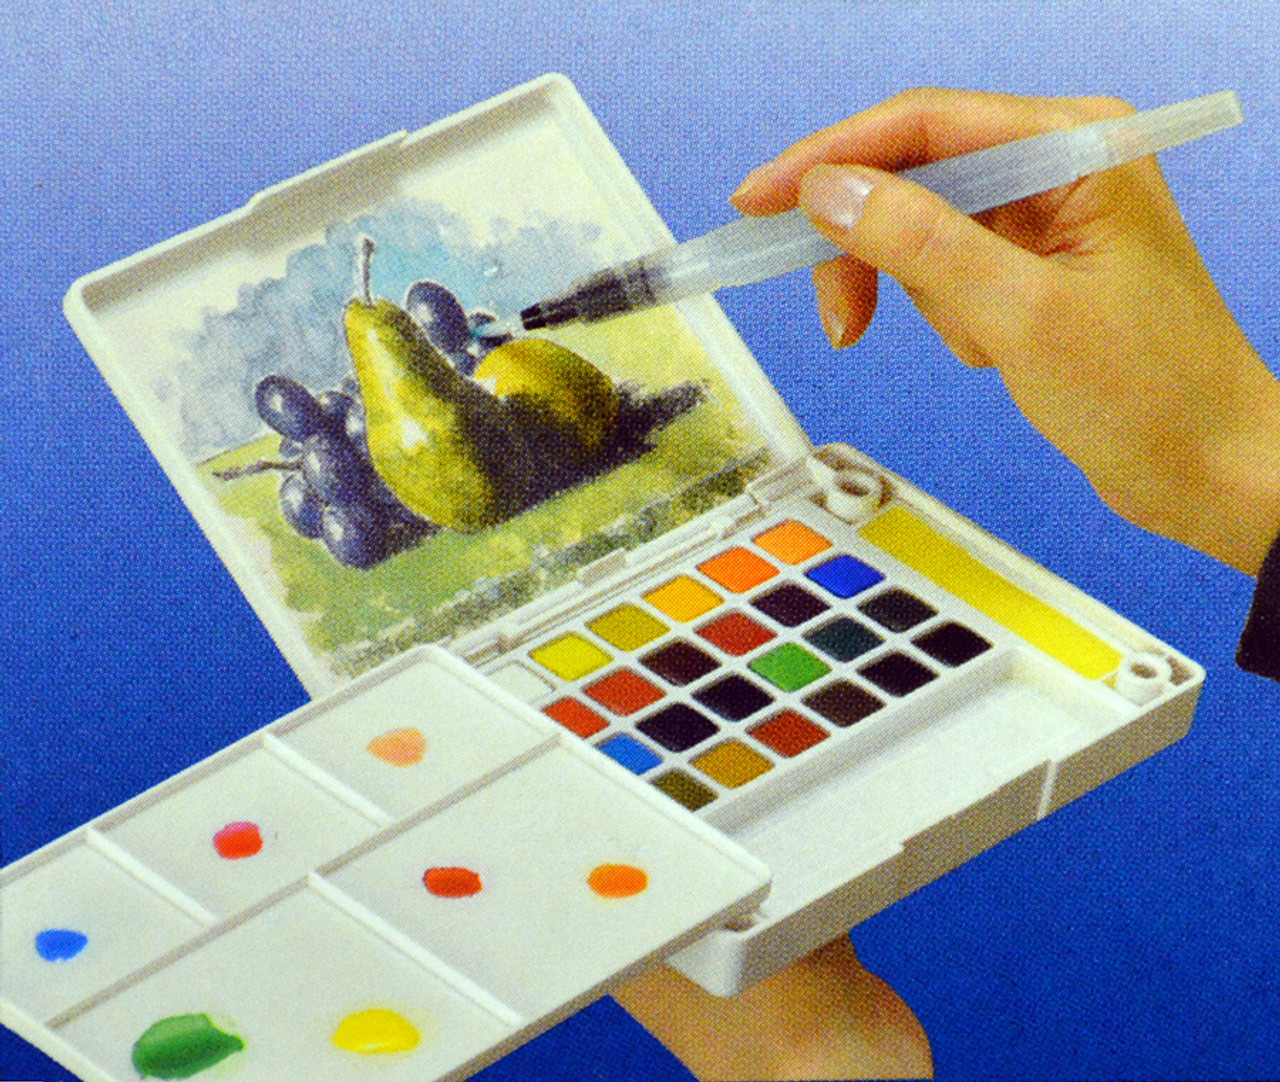 Sakura Koi Pocket Field Sketch Kit - Watercolor Sets for Painting On the Go  - 24 Colors - 1 Water Brush - 1 Sponge - 1 Mixing Palette